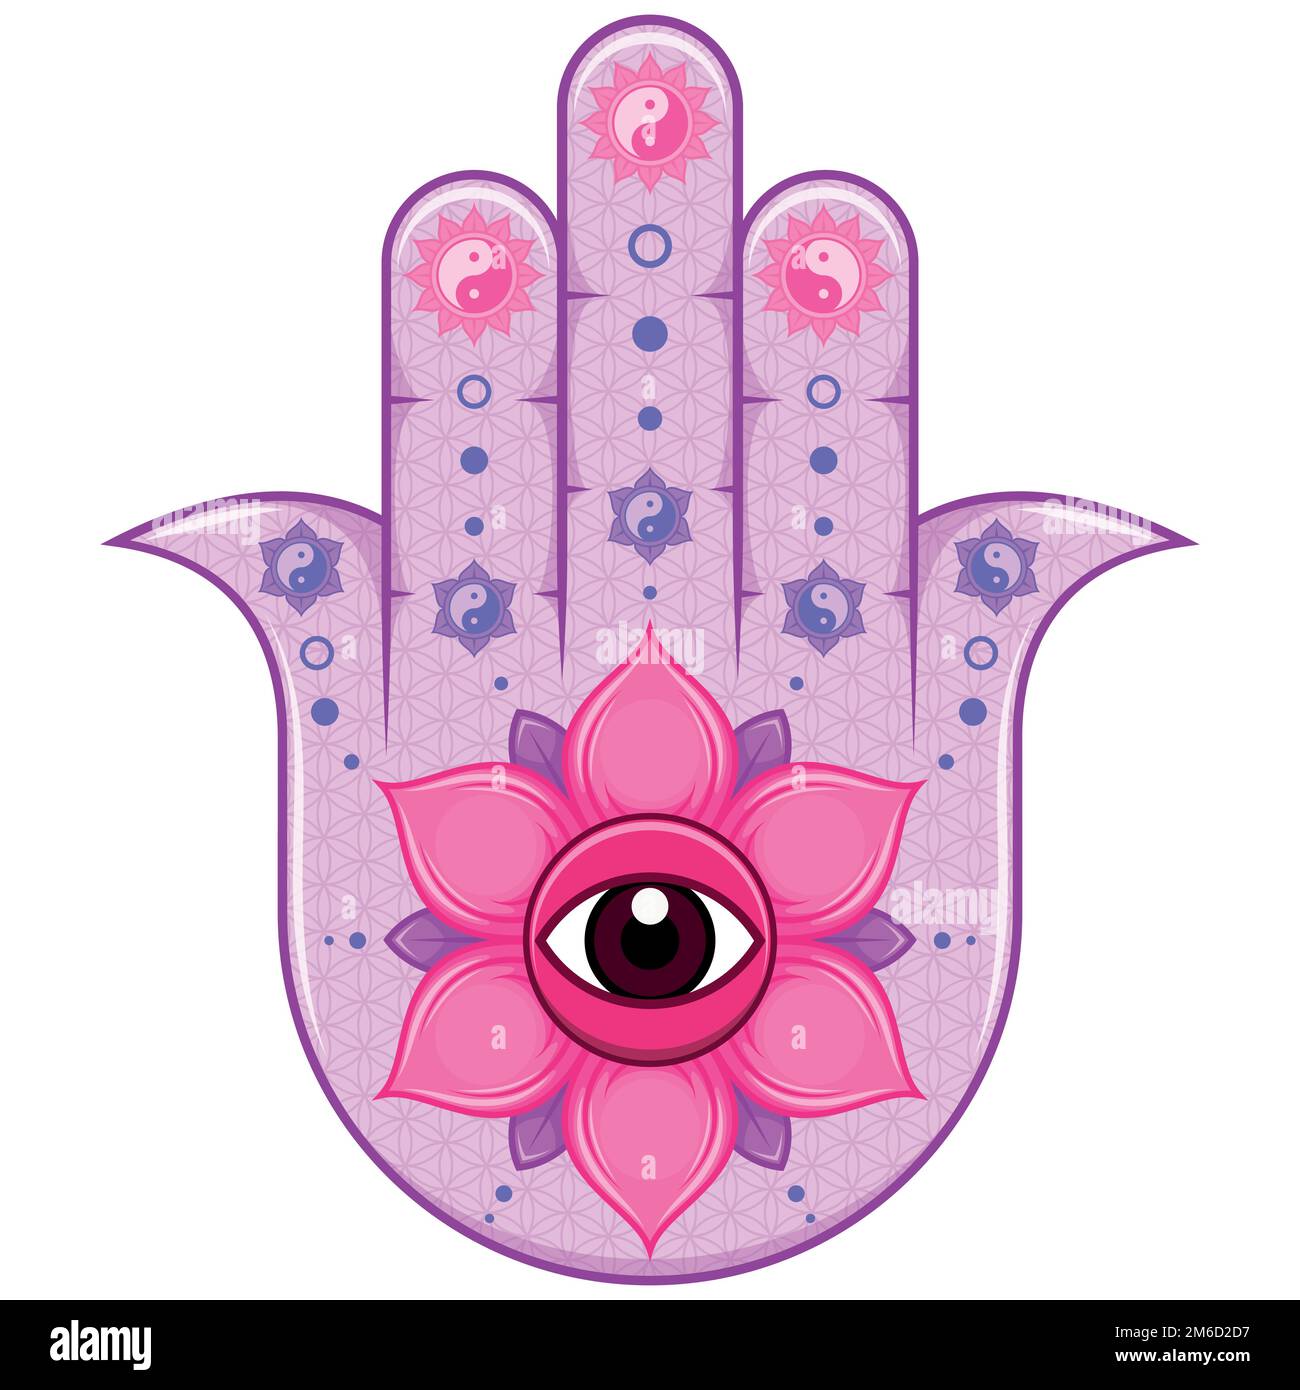 Hamsa symbol vector design with lotus flower and yin yang, hand of fatima symbol, illustration of Jamsa with god's eye Stock Vector